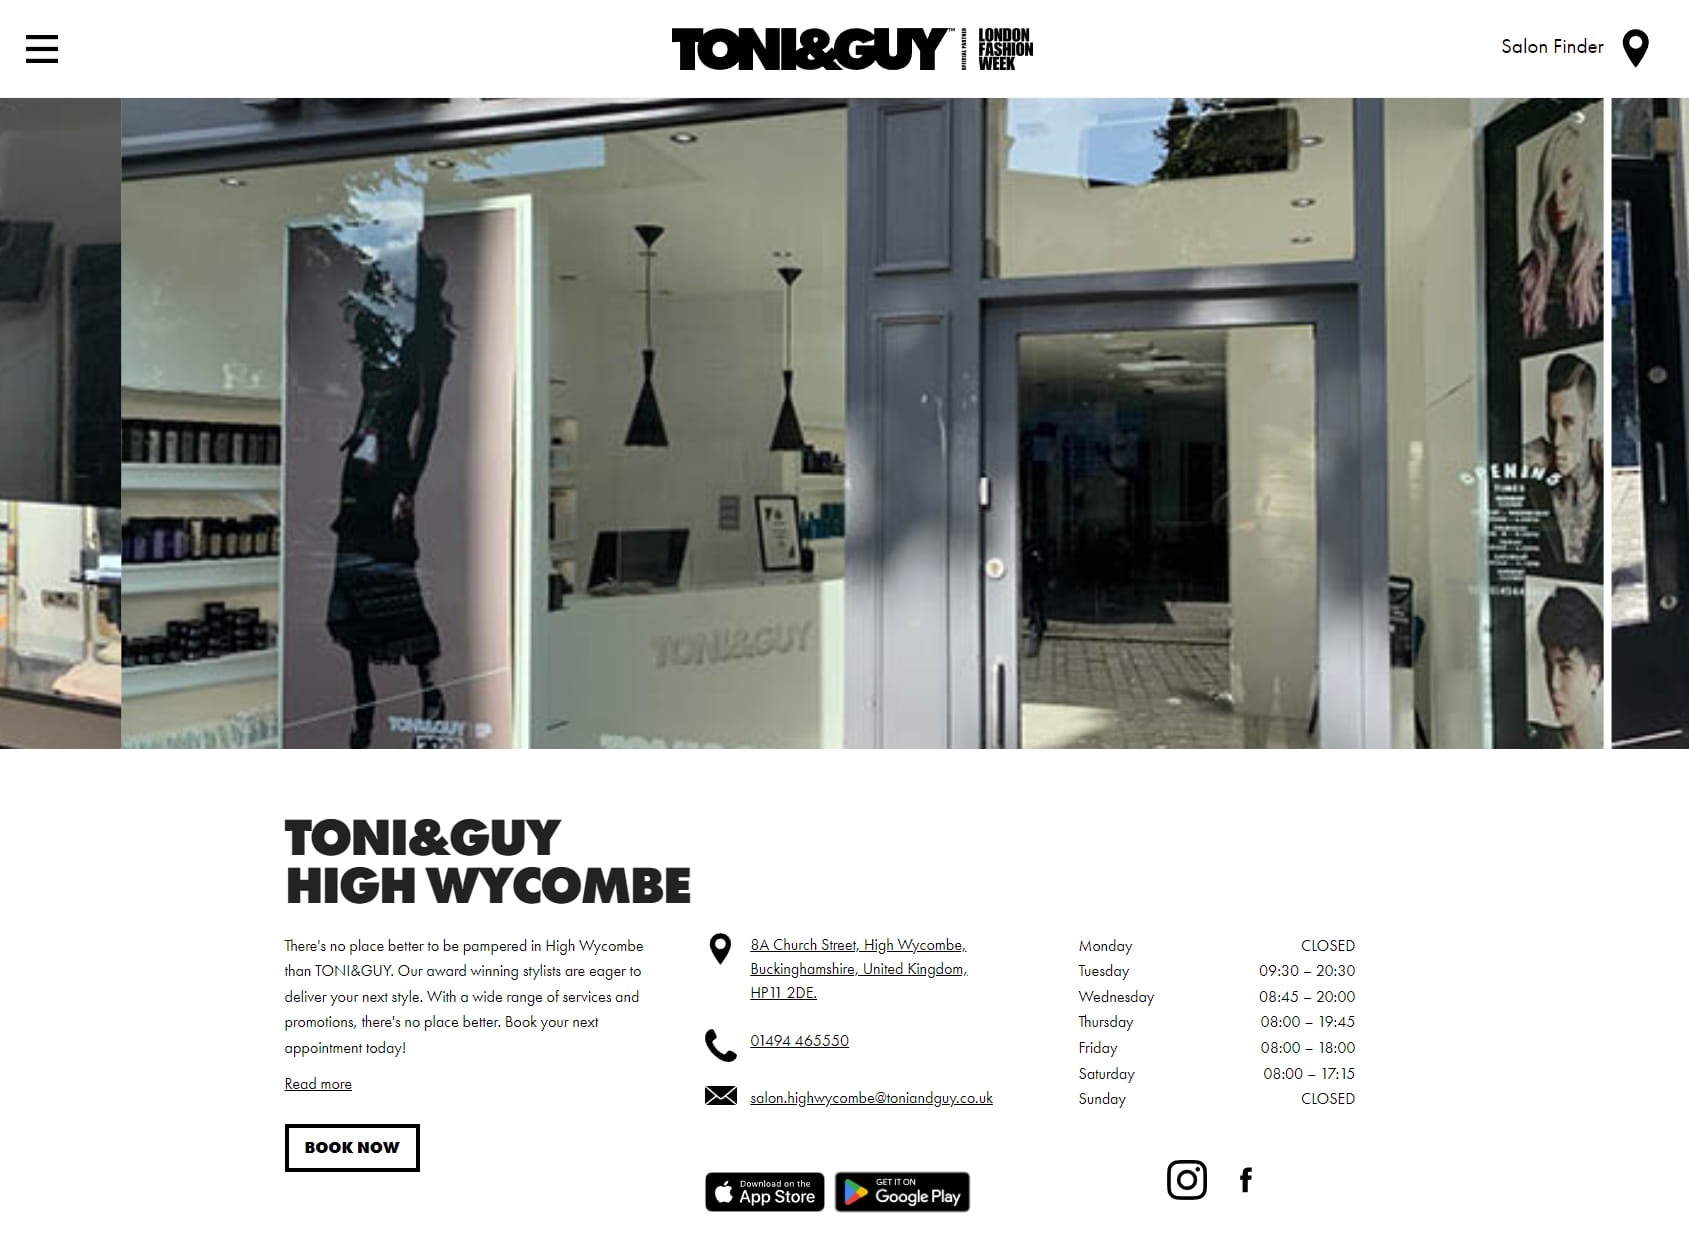 TONI&GUY High Wycombe